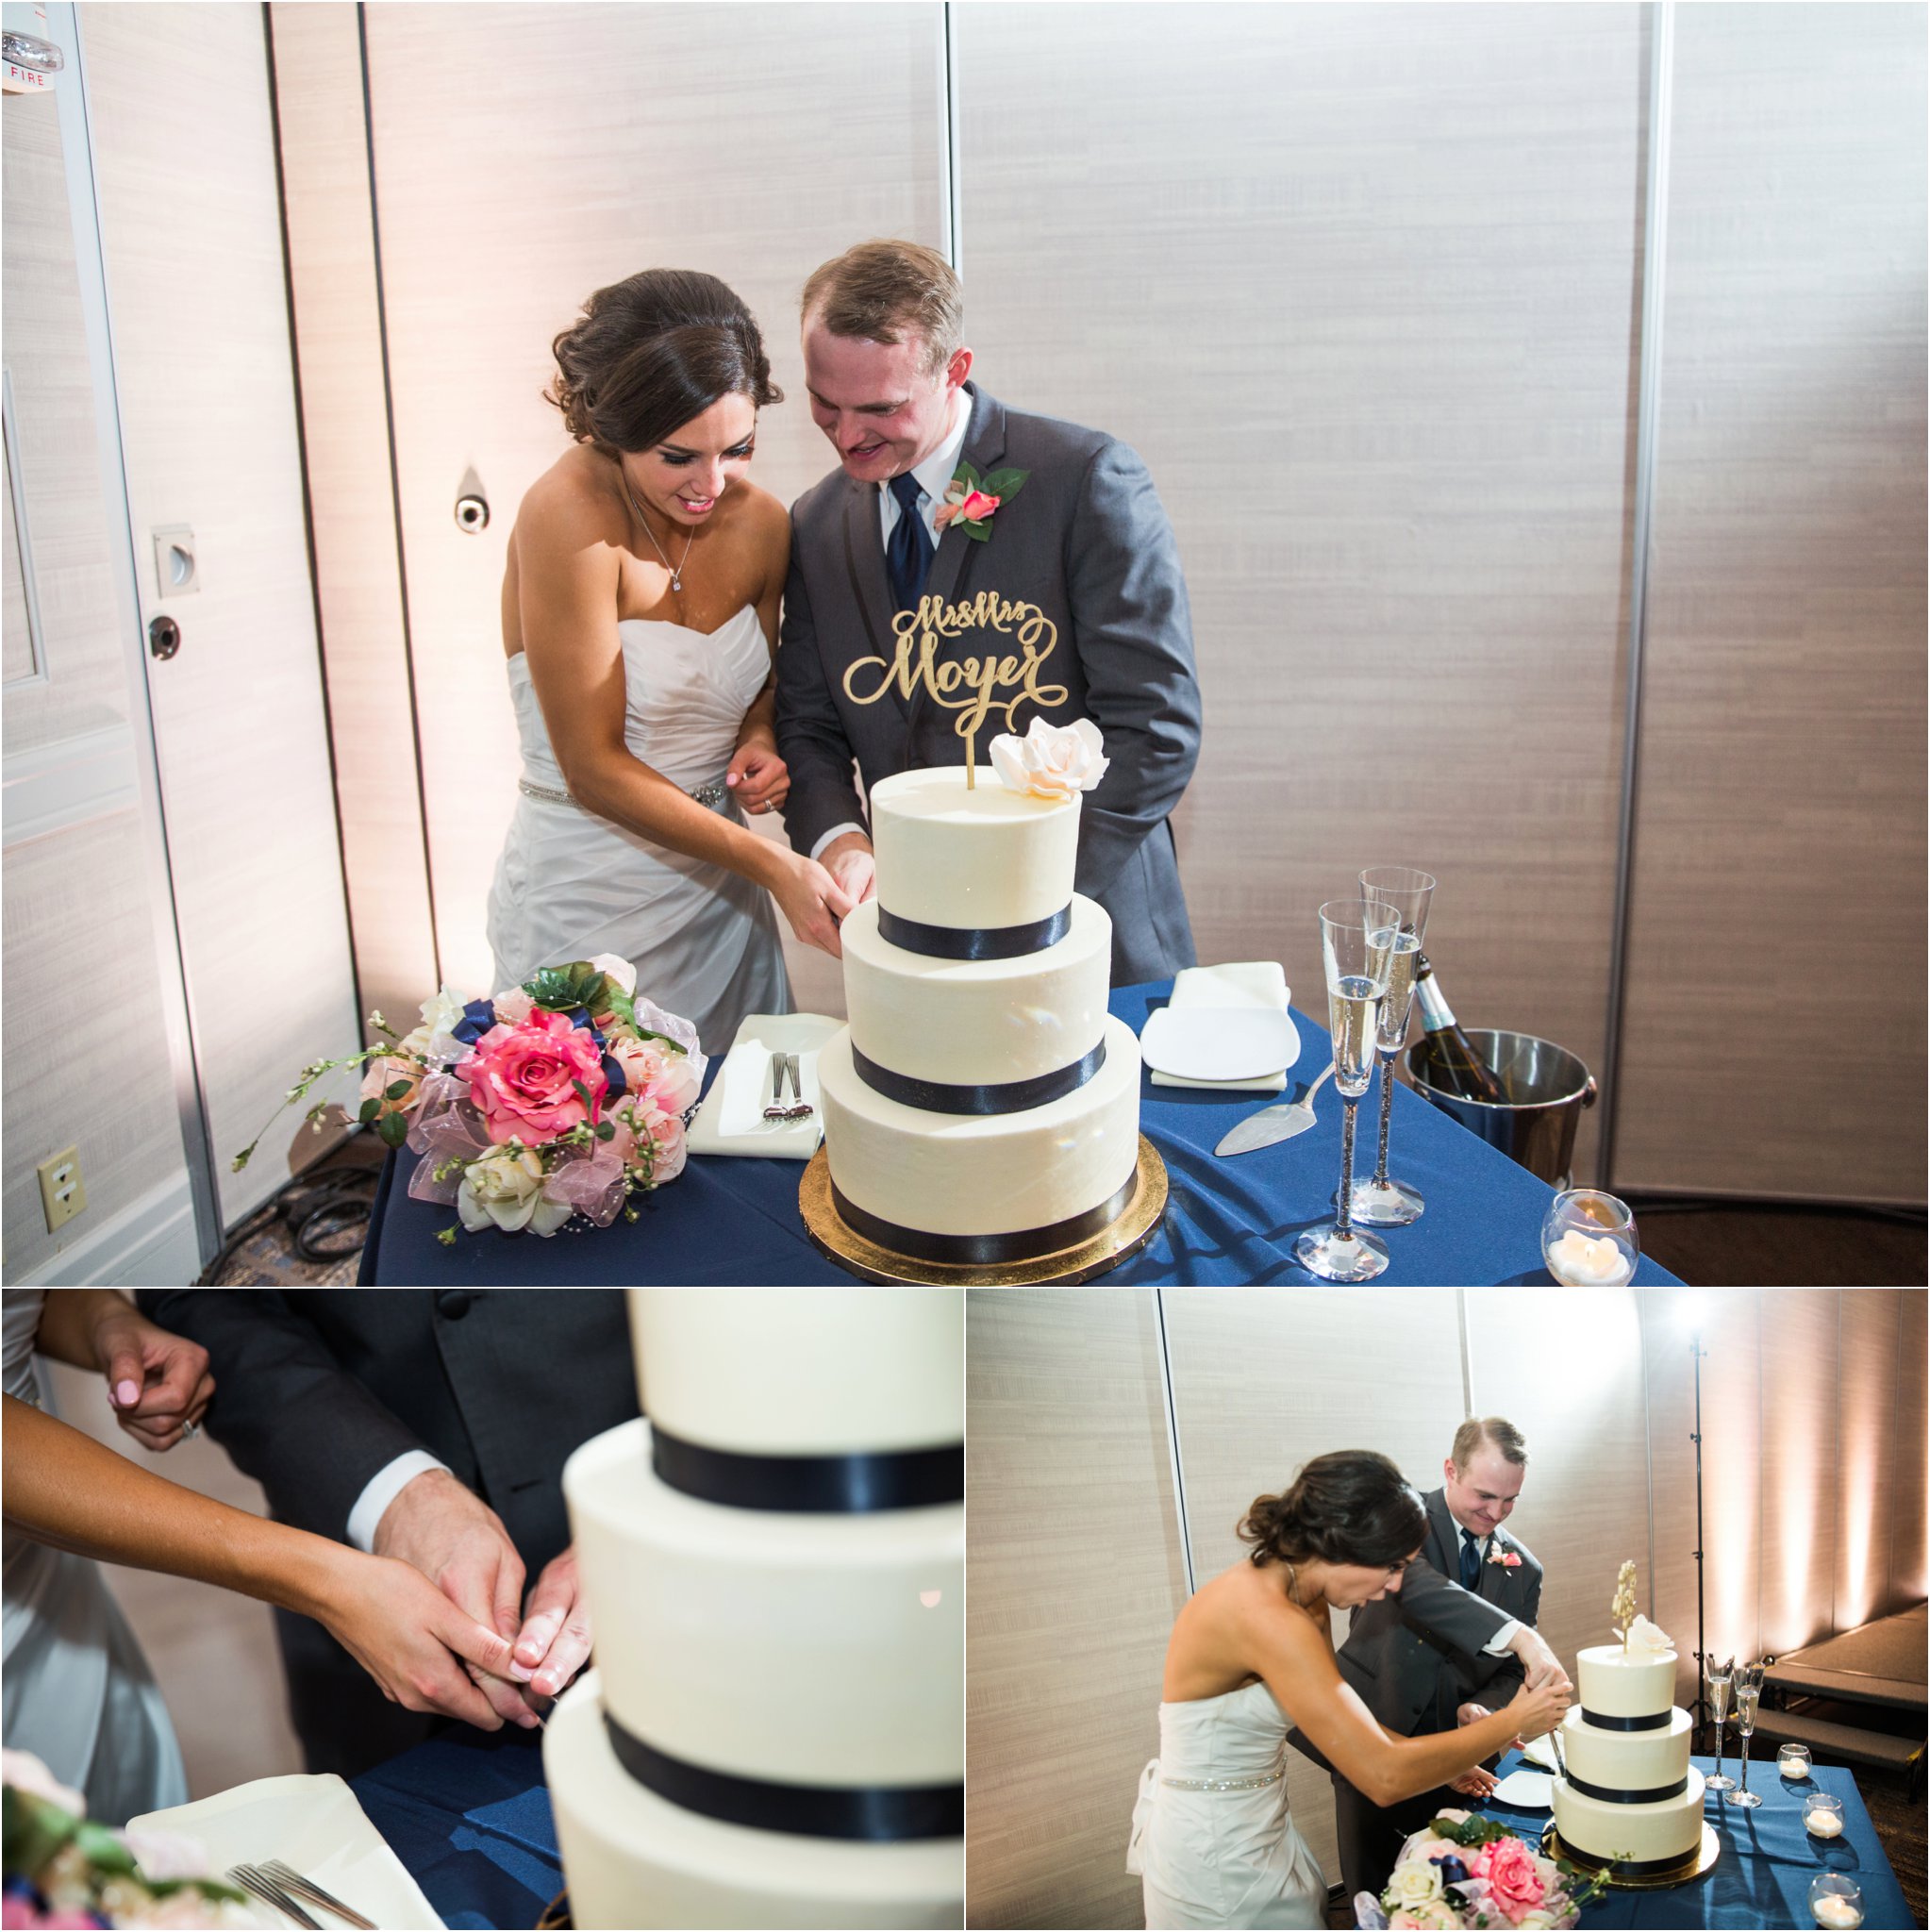 wedding | wedding photos | wedding photography | images by feliciathephotographer.com | Country Club Plaza | Kansas City | The Marriott | Unity Temple | reception venue | reception activities | cutting the cake 